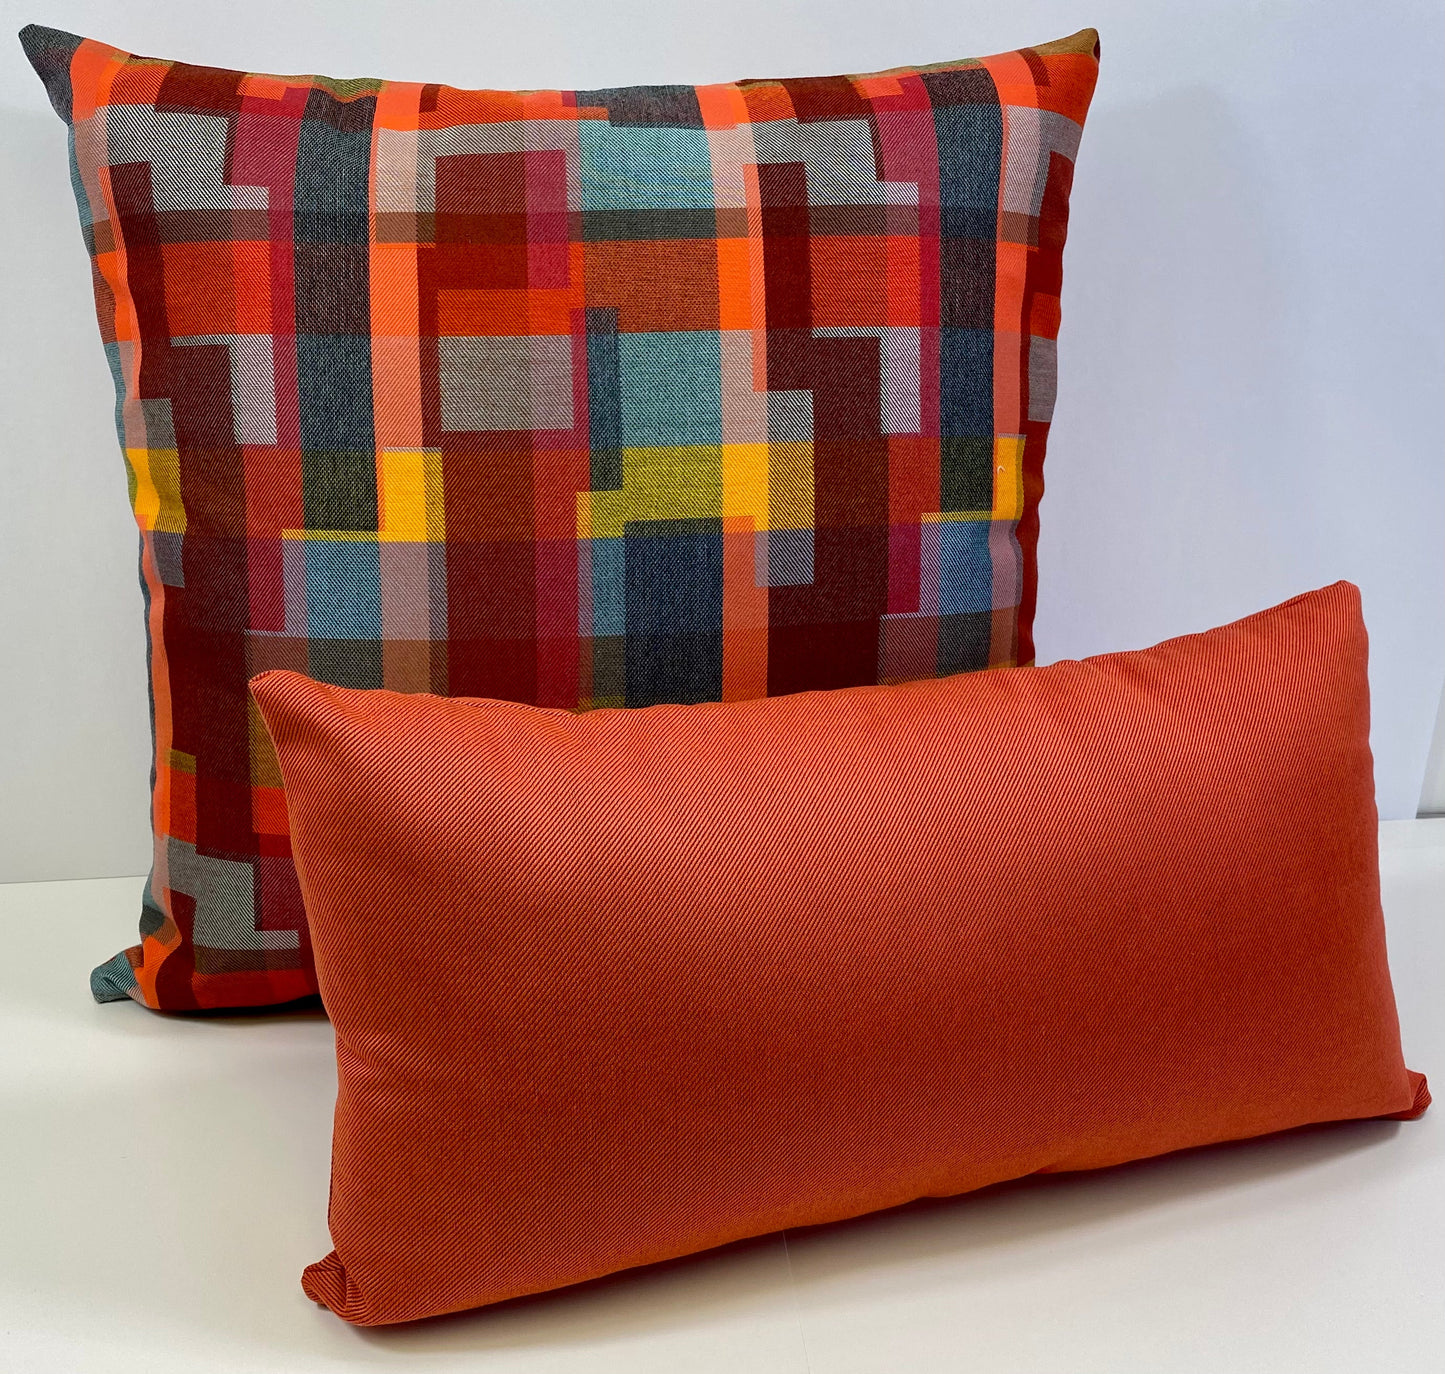 Luxury Outdoor Pillow - 22" x 22" - Madras - Sangria; Sunbrella, or equivalent, fabric with fiber fill